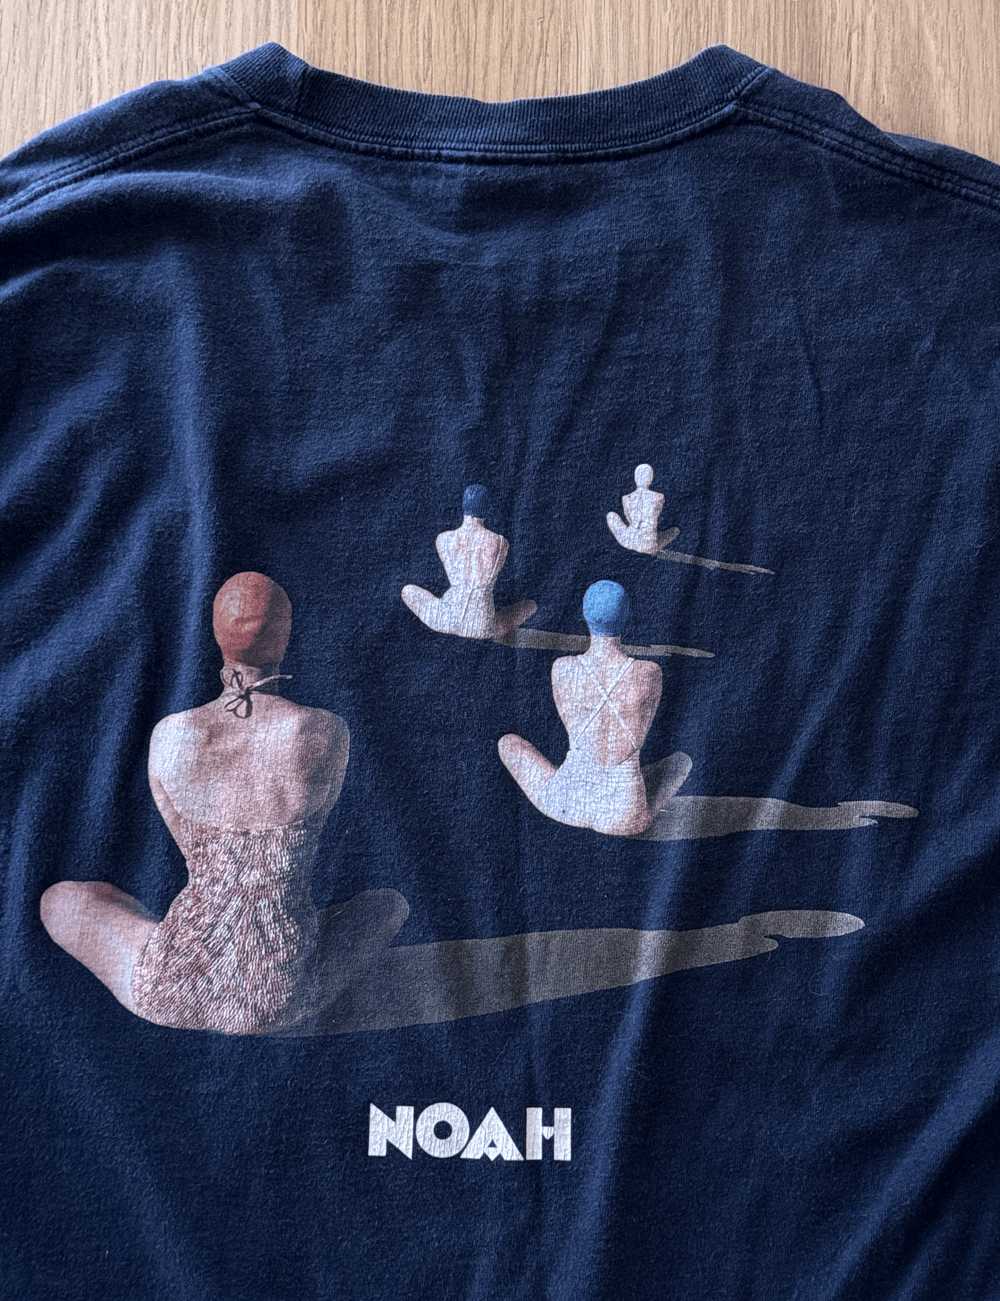 Noah T-Shirt - image 3